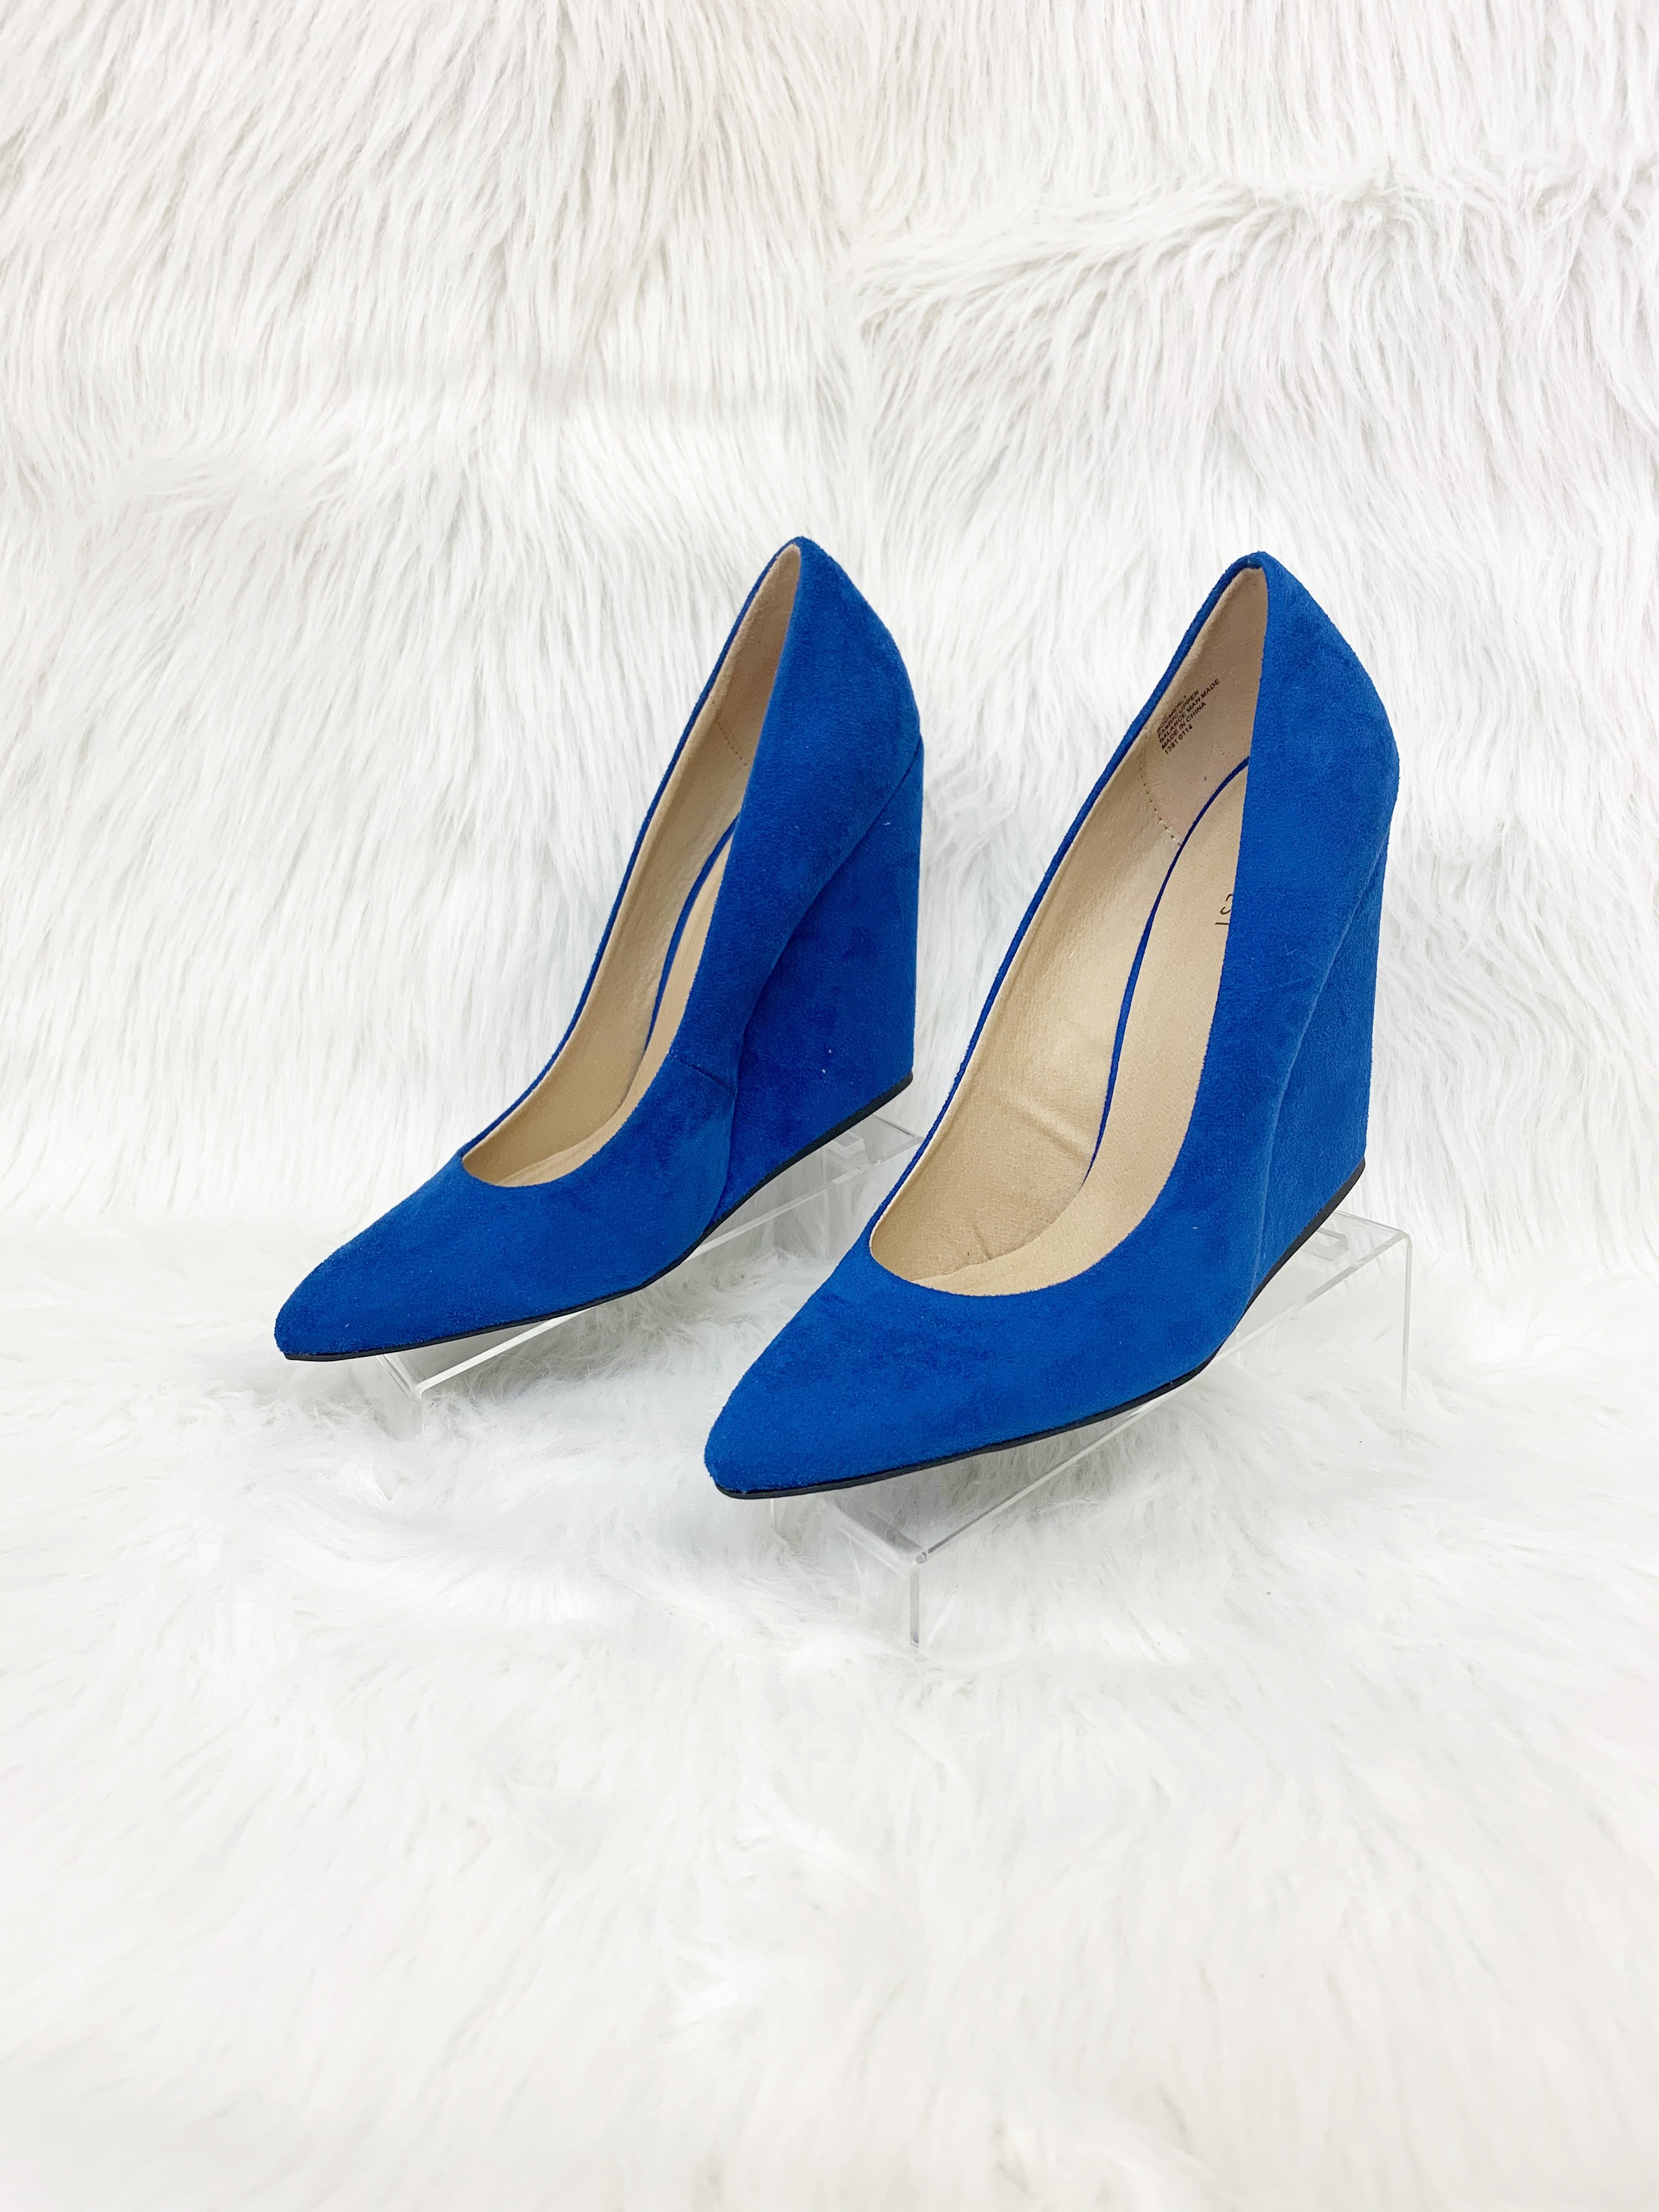 royal blue heels size 11